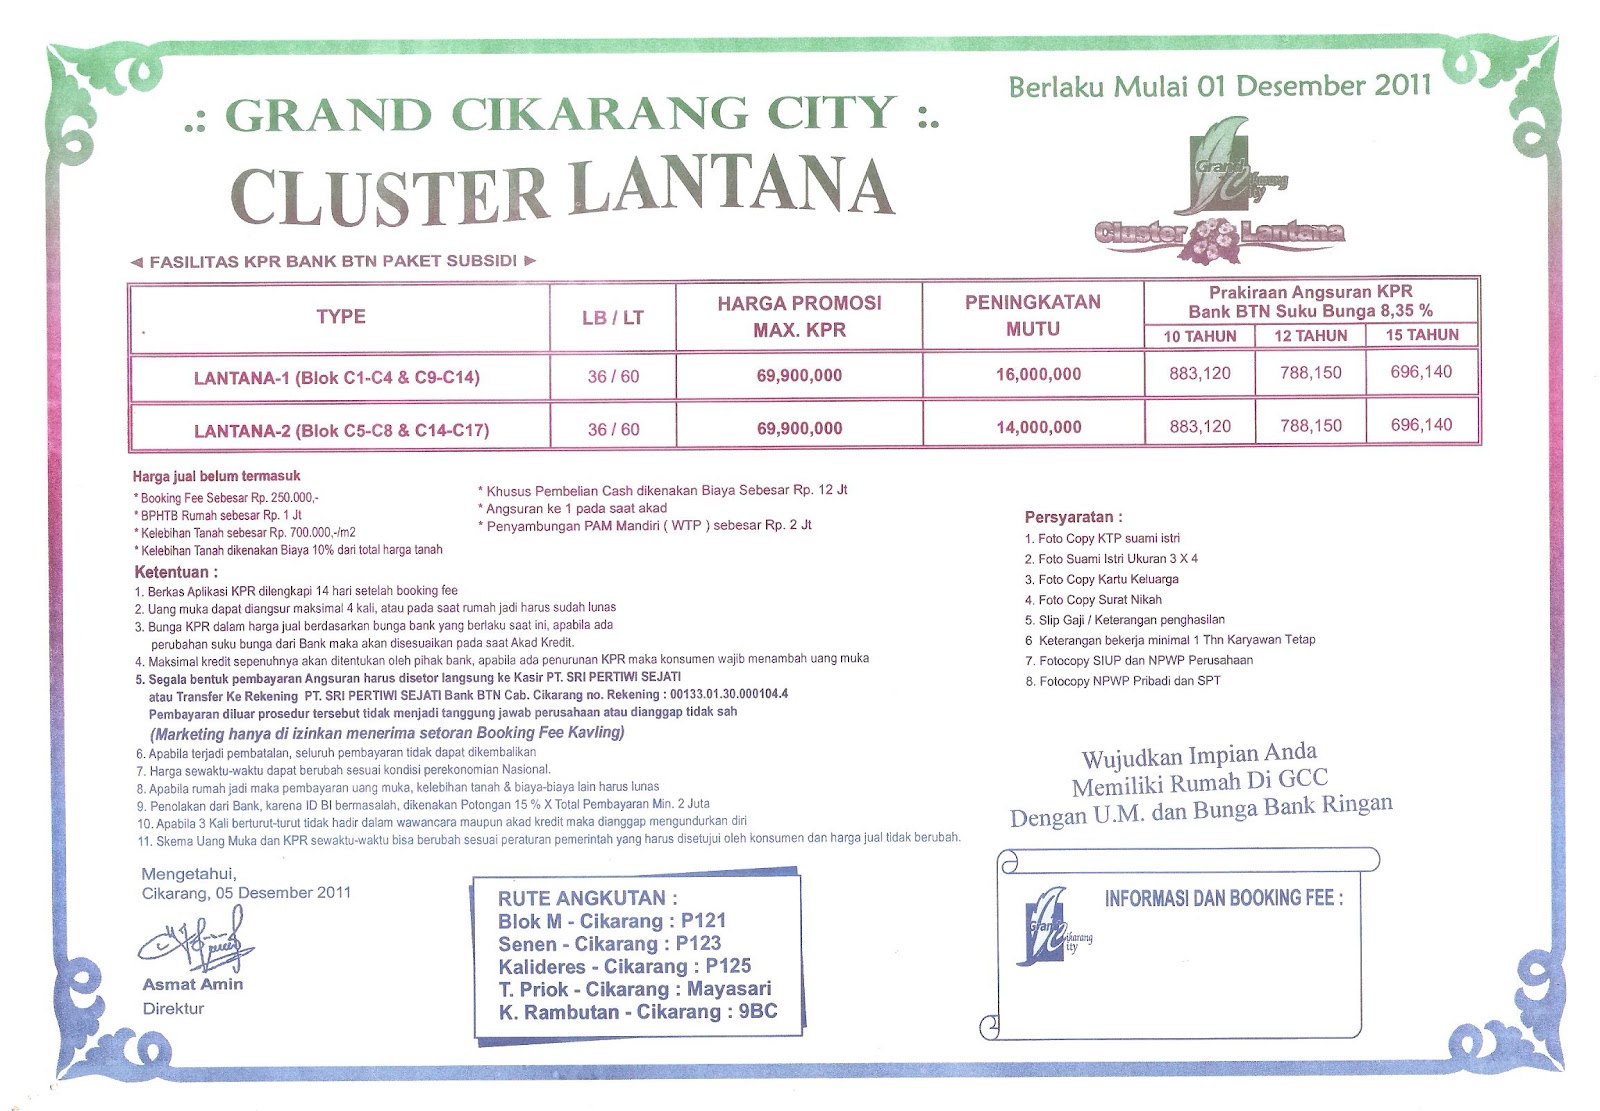 GRAND CIKARANG CITY: UPDATE HARGA FEBRUARI 2012